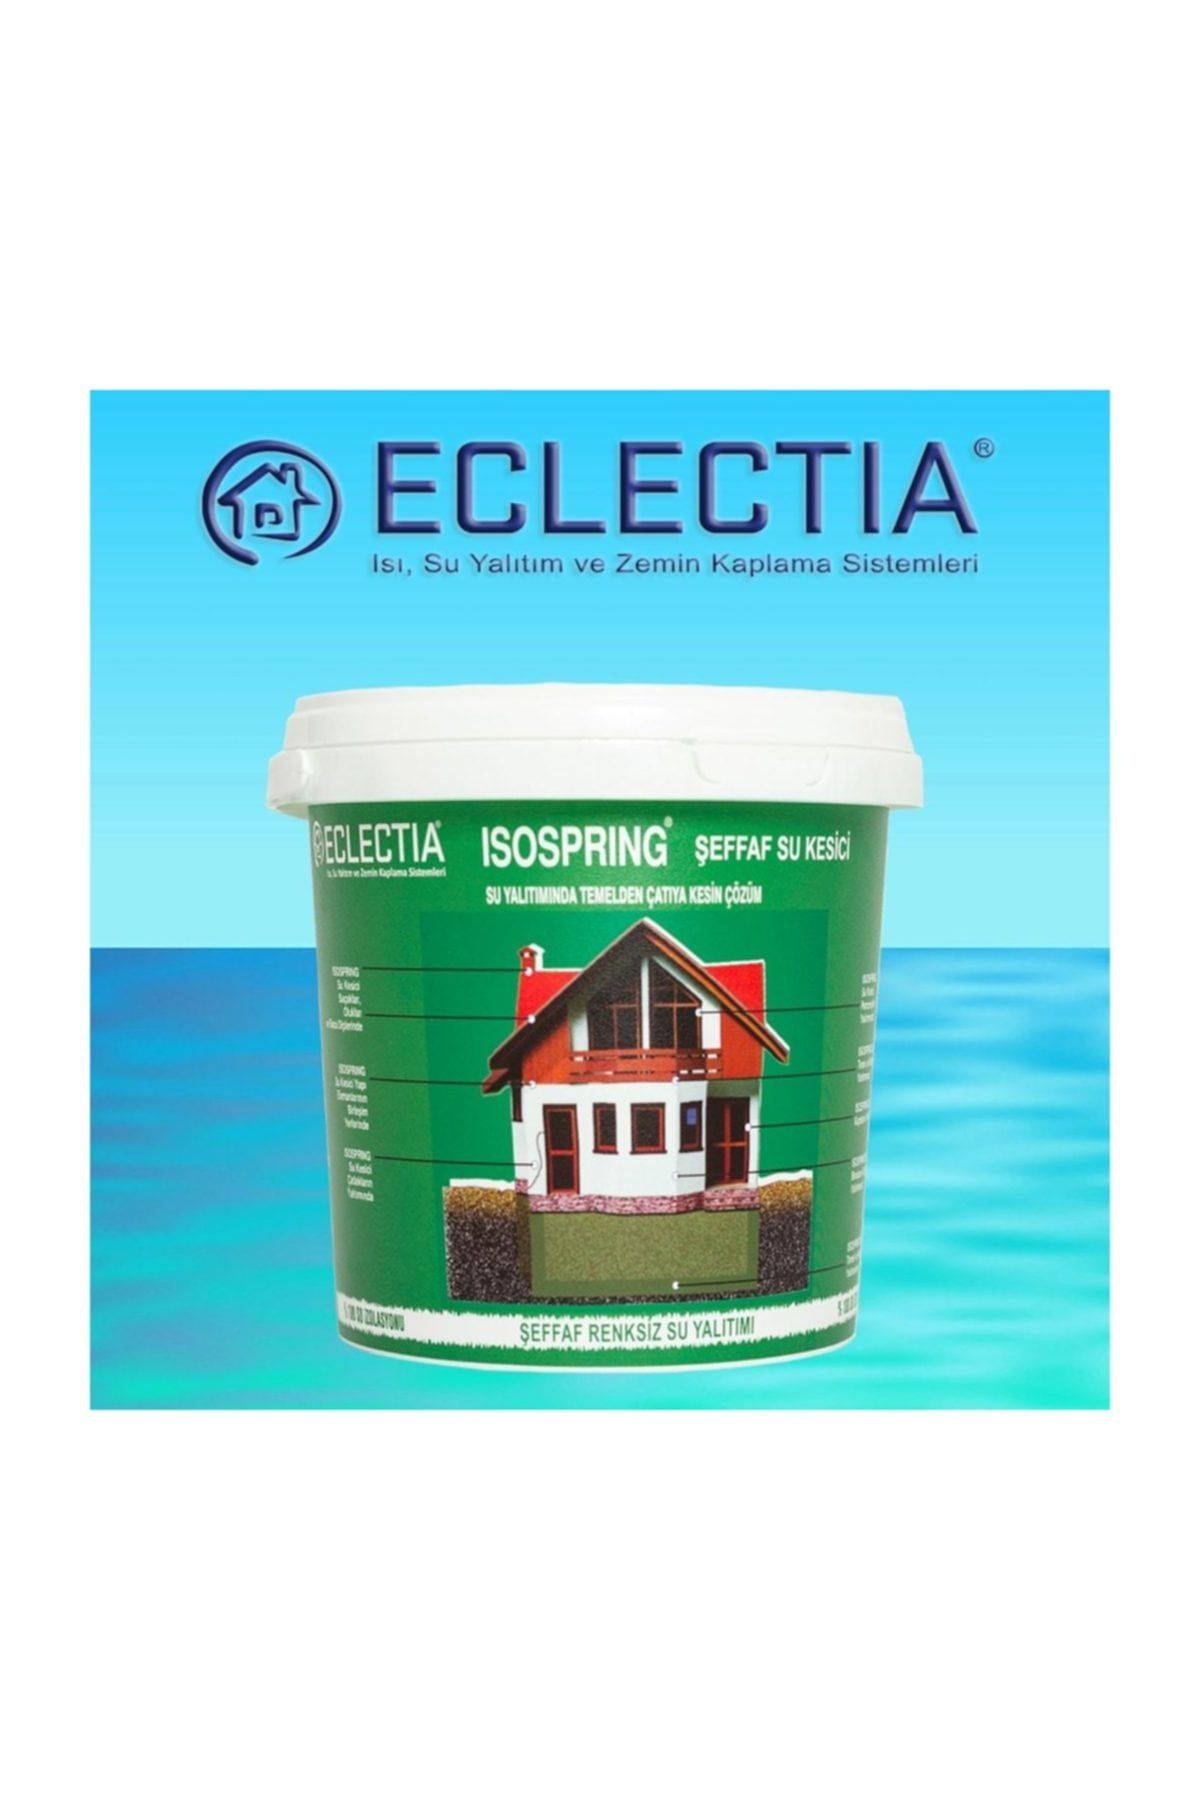 ECLECTİA - Isospring Şeffaf Su Kesici 2,5 kg